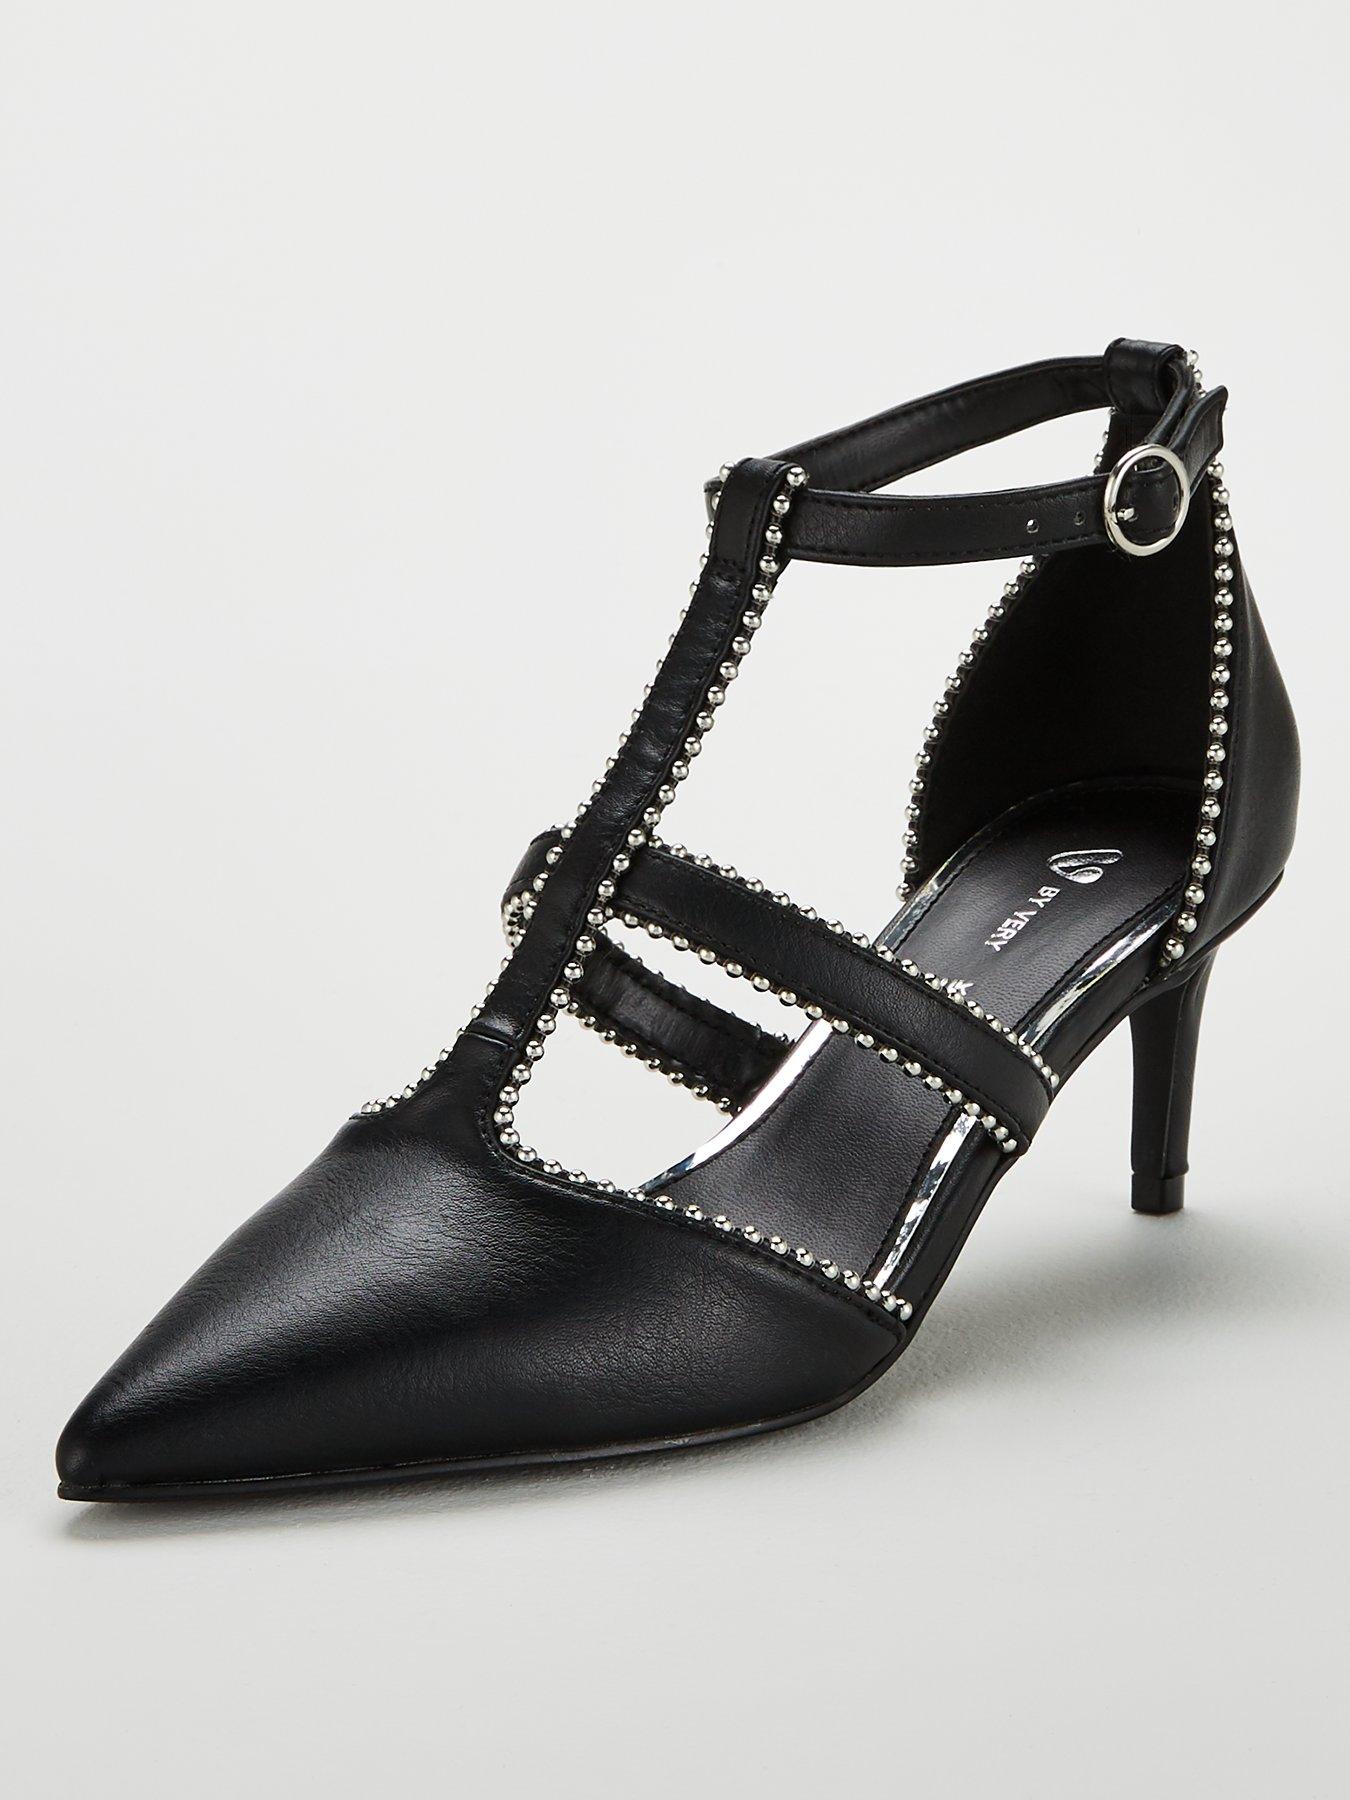 black court shoes mid heel